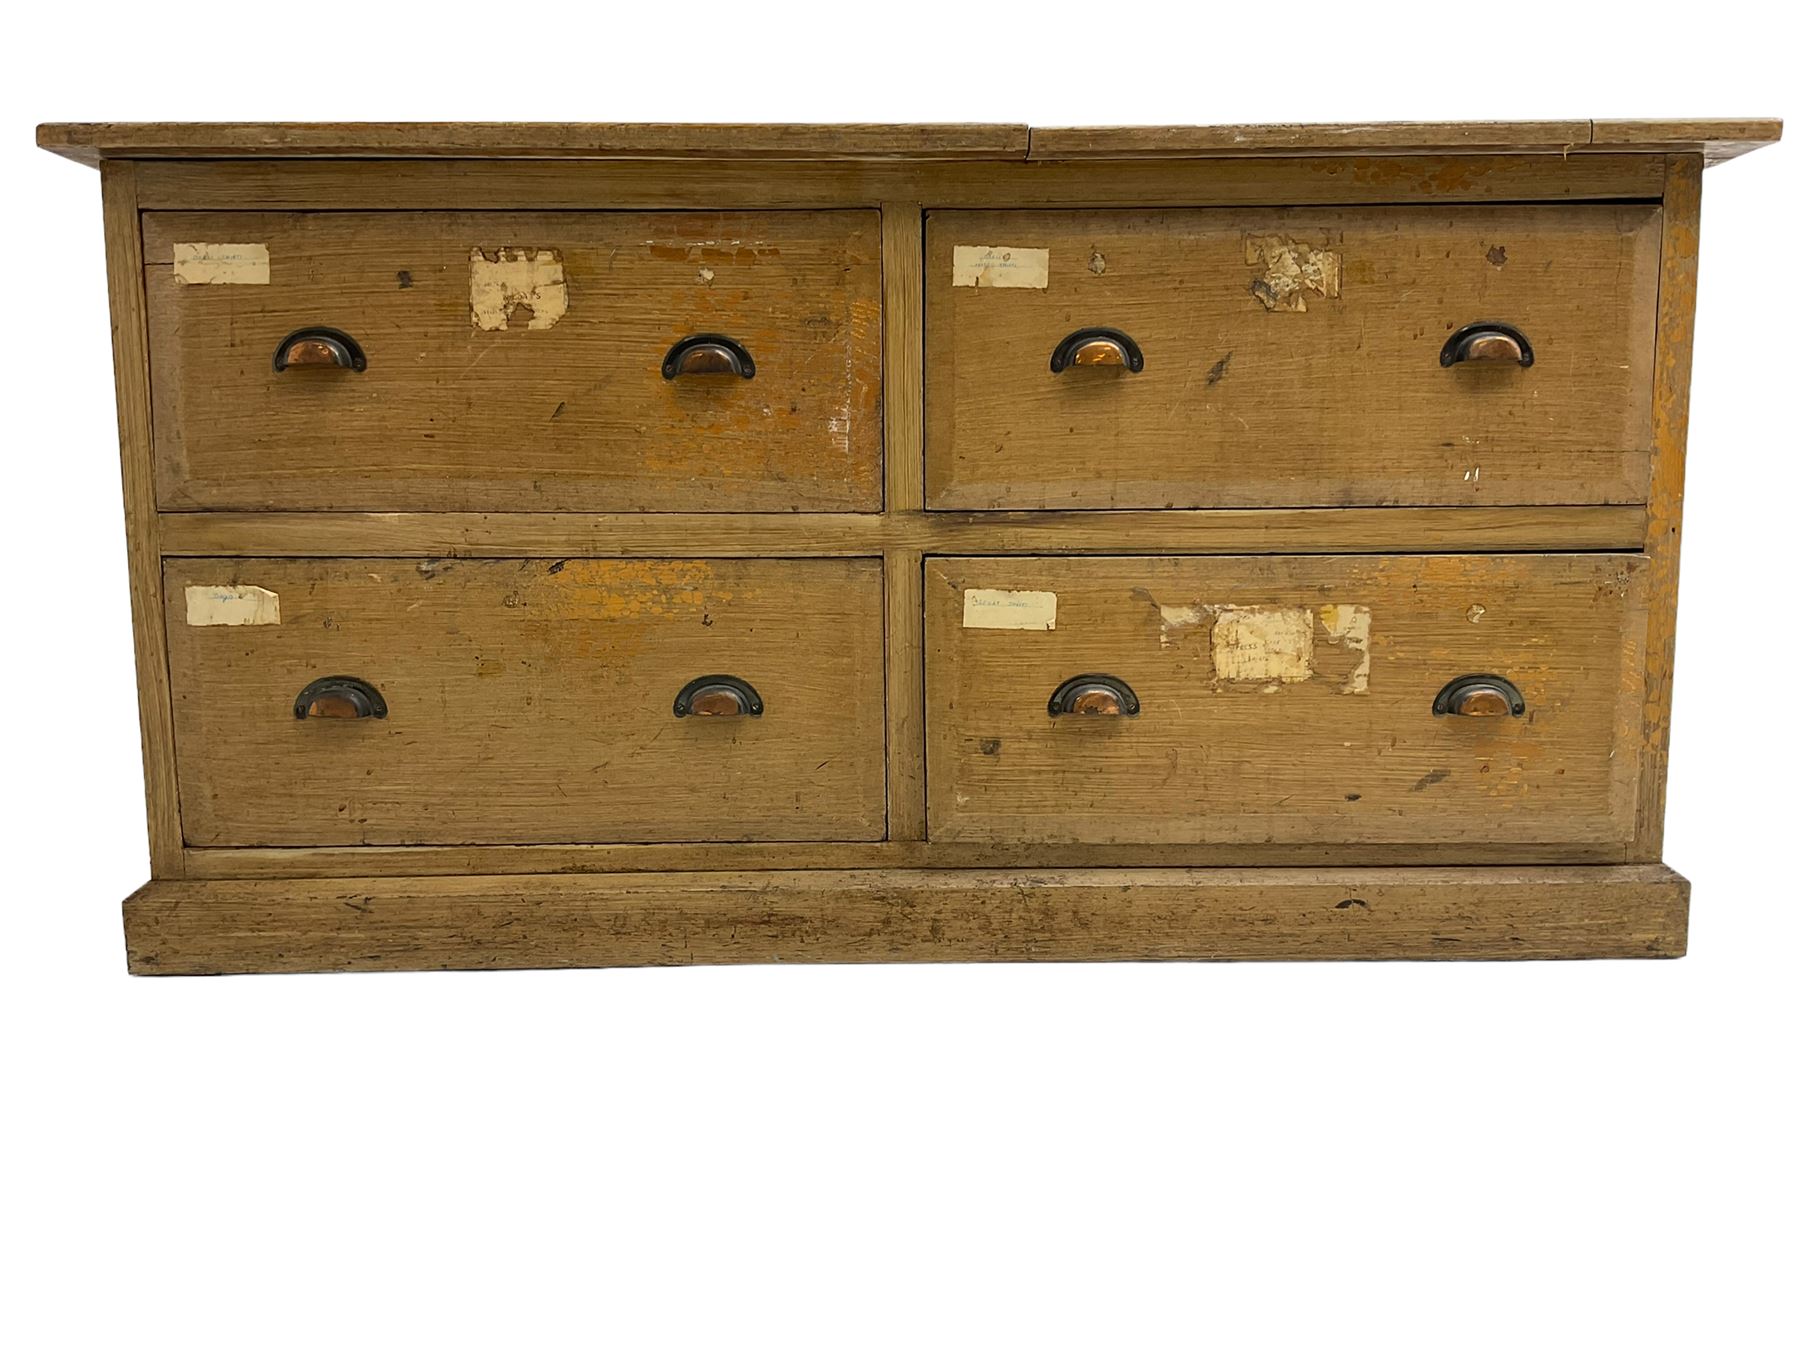 19th century rustic pine chest